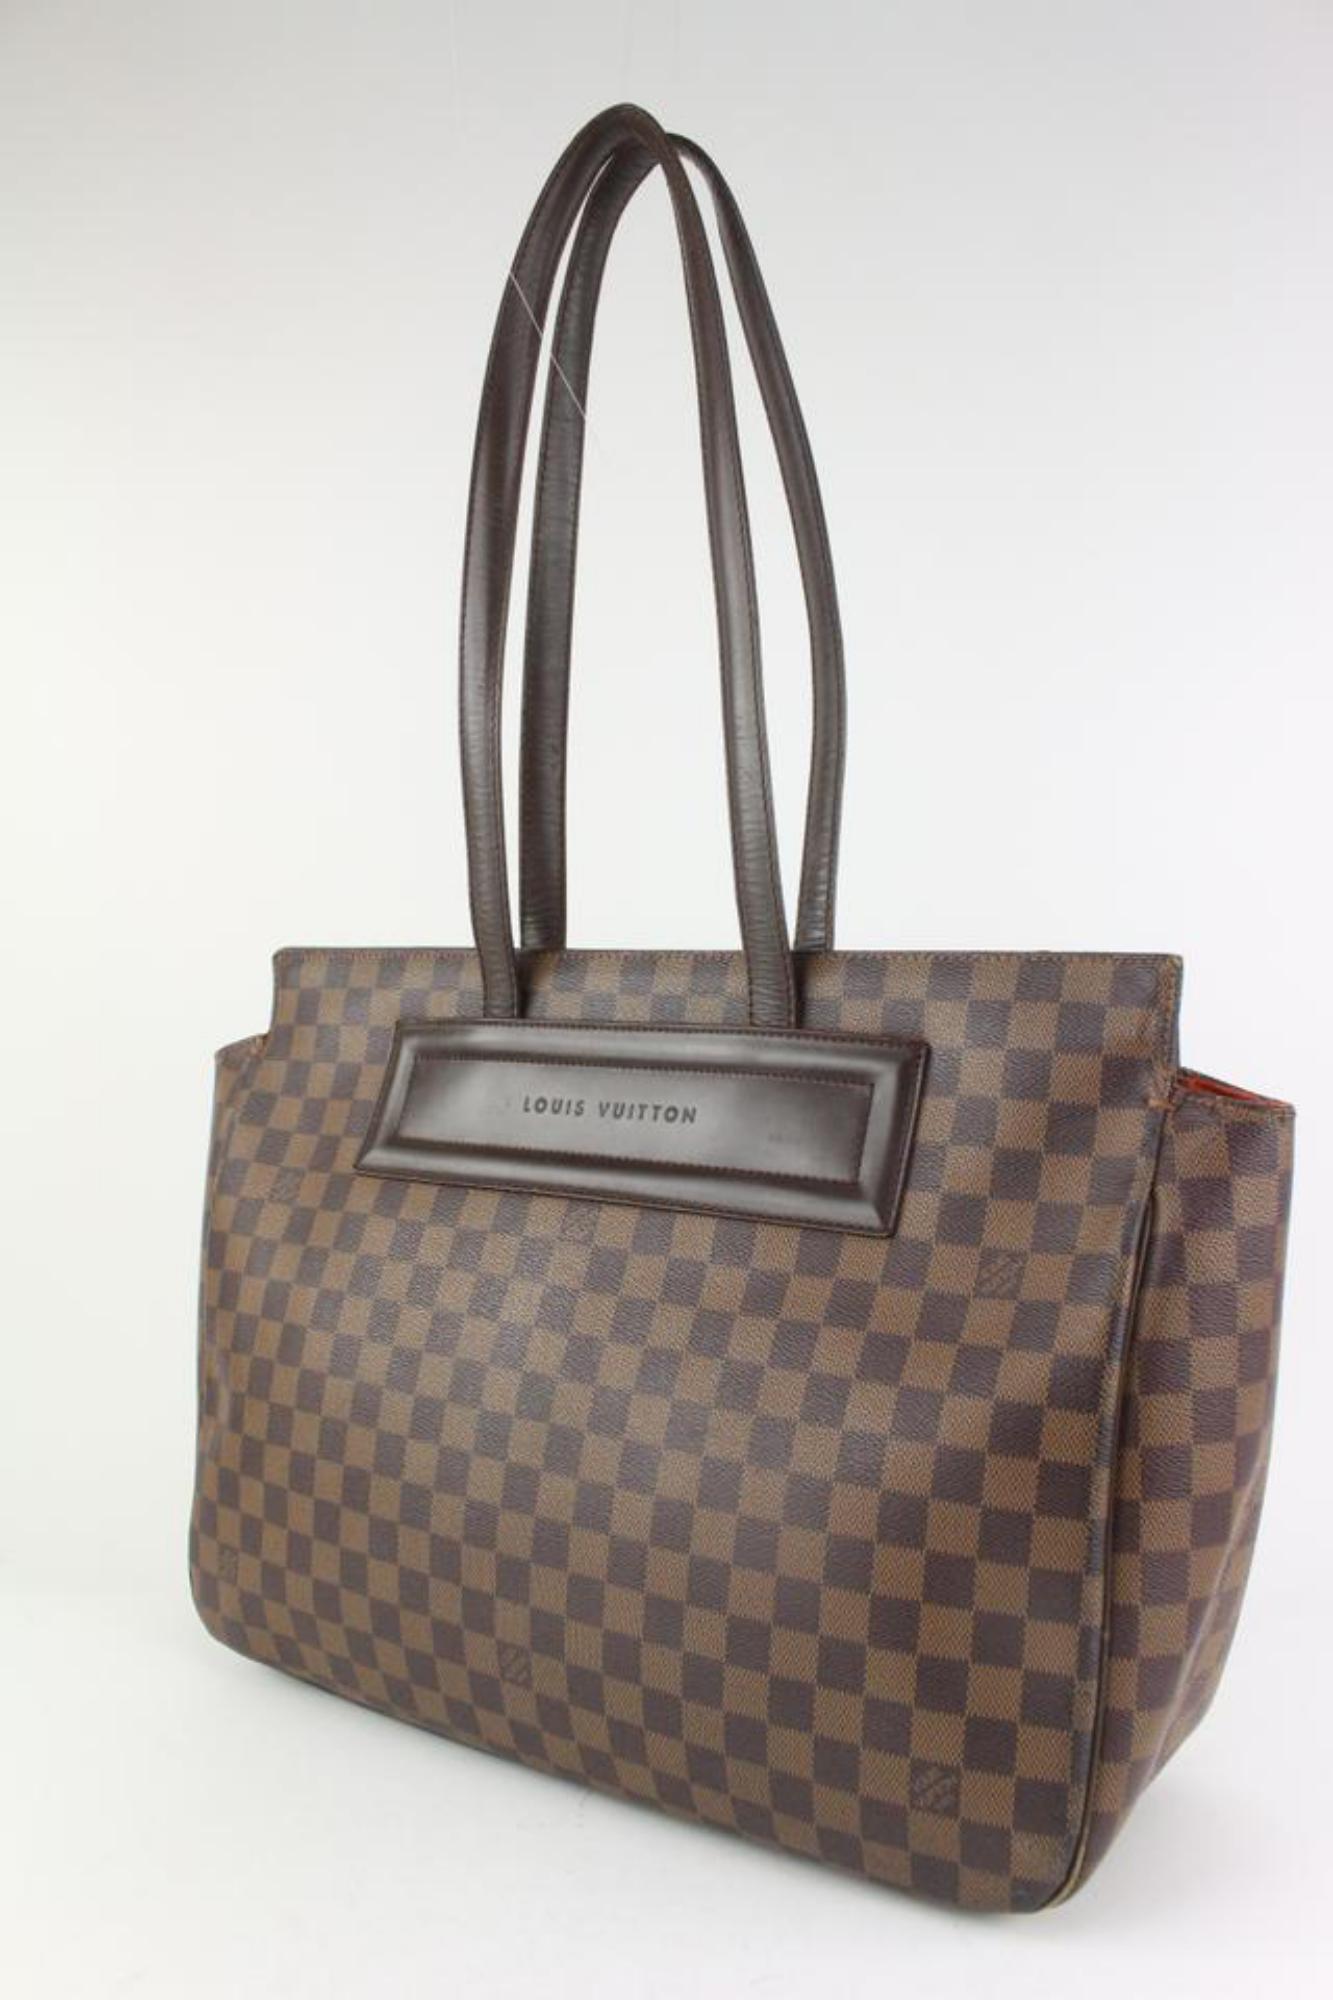 Louis Vuitton Damier Ebene Parioli Tote bag s127LV0
Date Code/Serial Number: AR0979
Made In: France
Measurements: Length:  16.5